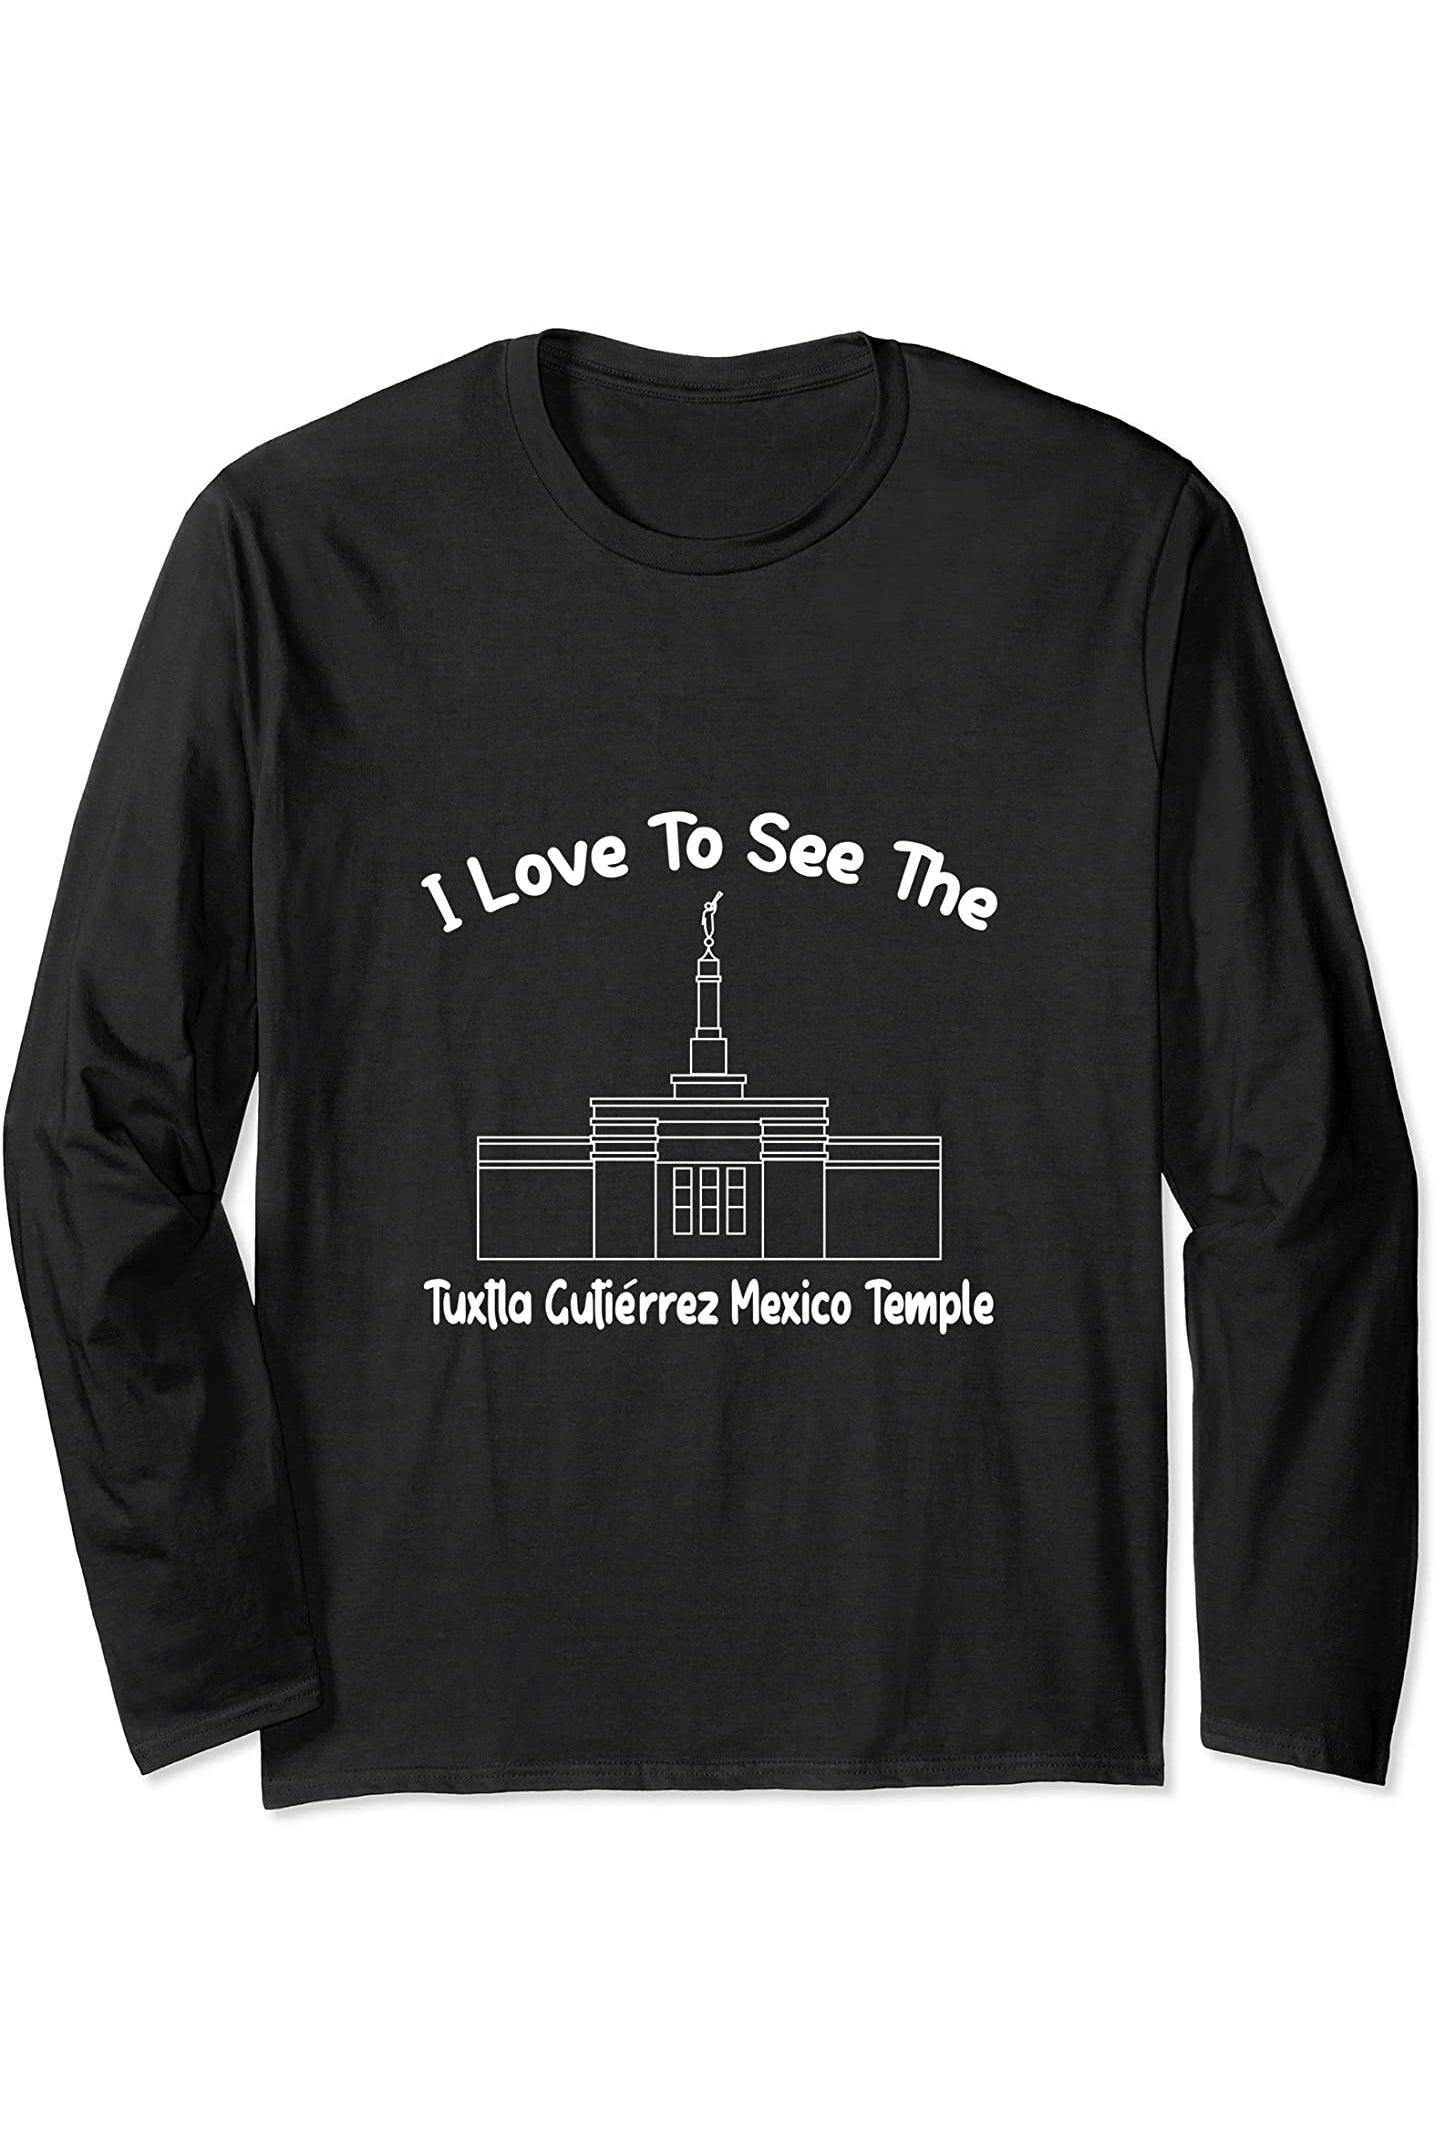 Tuxtla Gutierrez Mexico Temple Long Sleeve T-Shirt - Primary Style (English) US